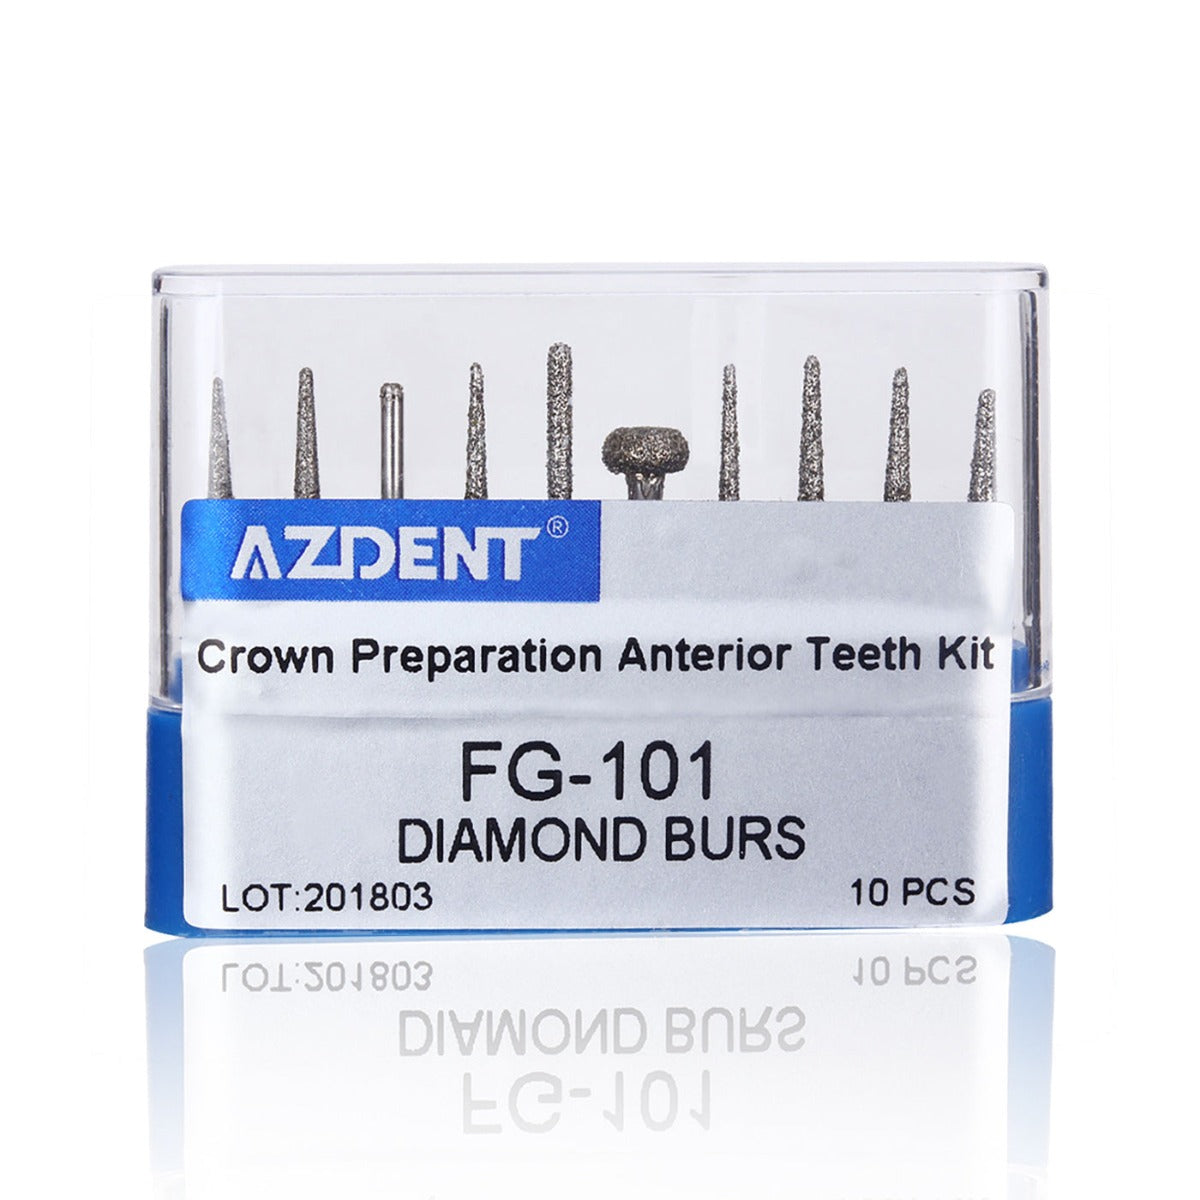 Dental Diamond Burs FG-101 For Crown Preparation Anterior Teeth Kit 10pcs/Kit - pairaydental.com